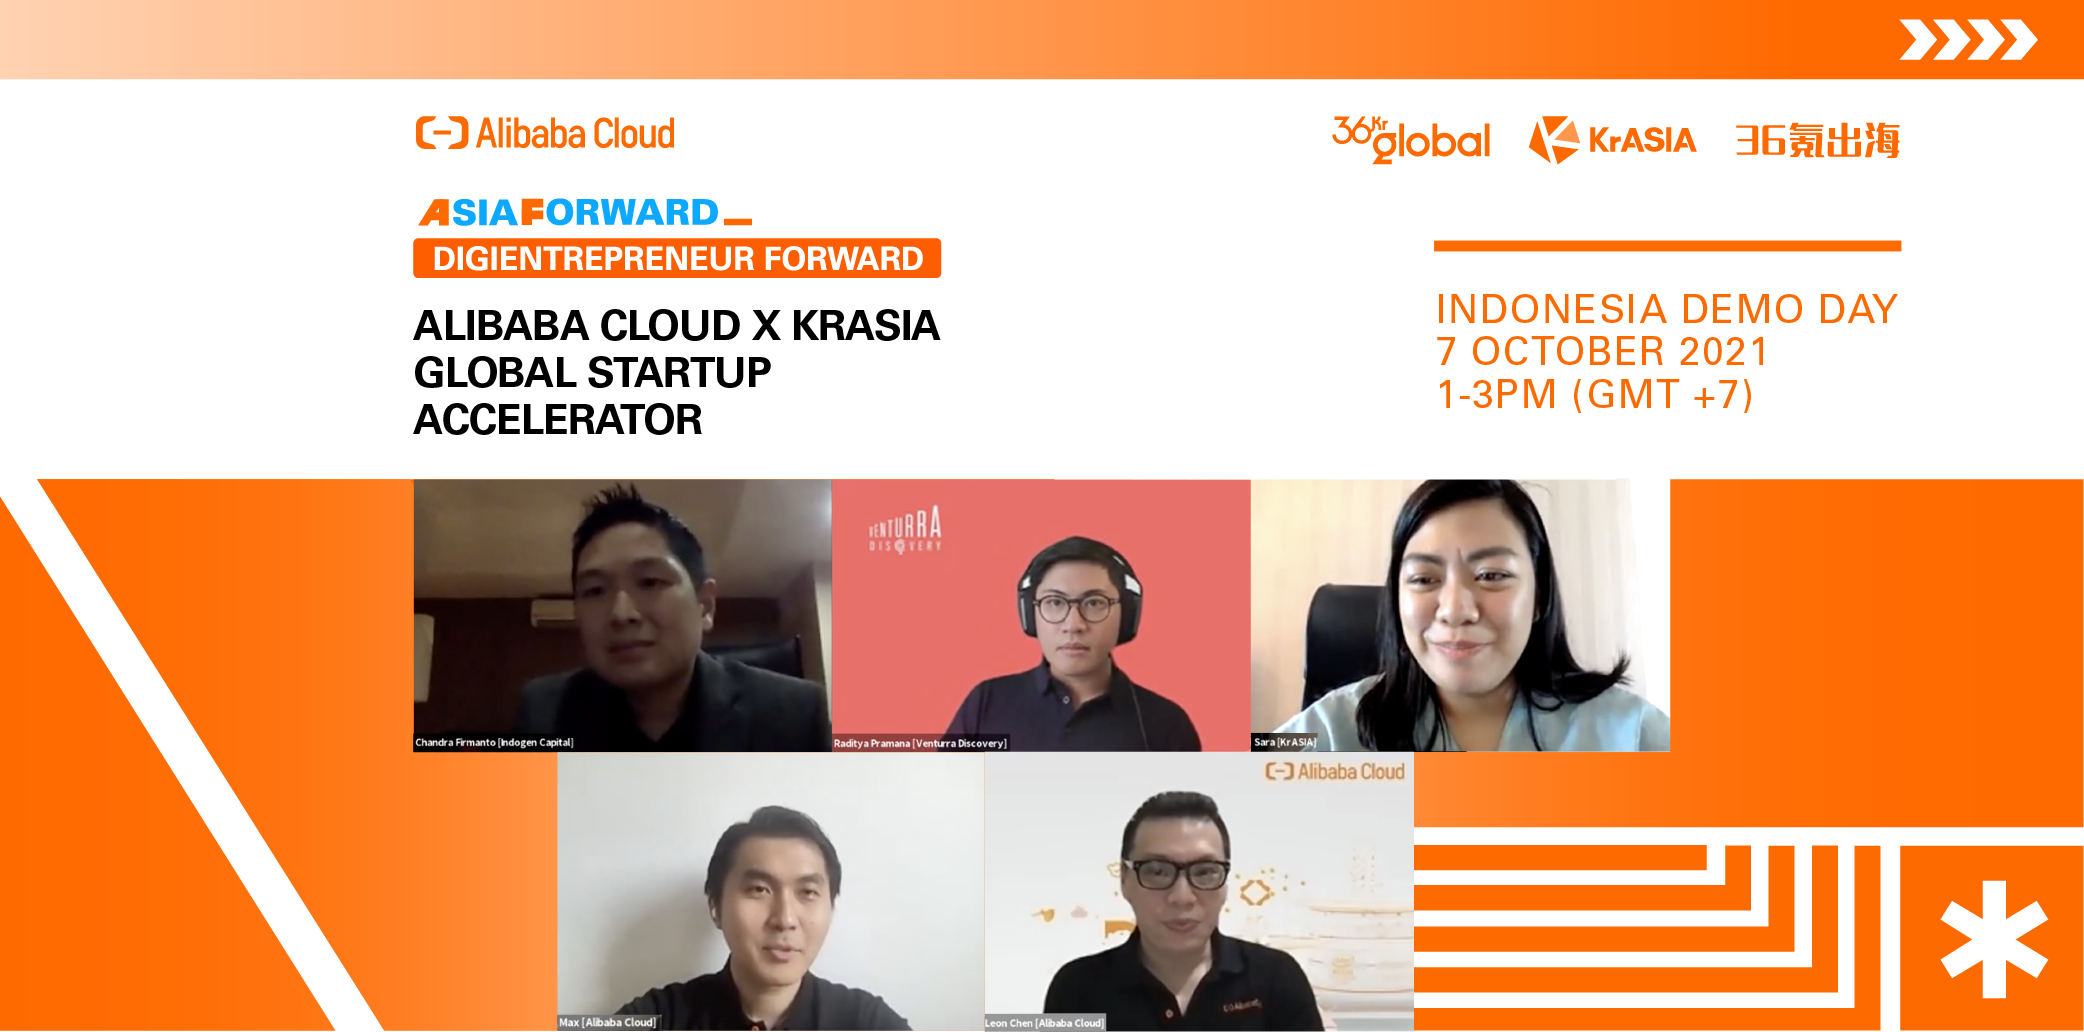 Recap of the Alibaba Cloud x KrASIA Global Startup Accelerator Indonesia Demo Day